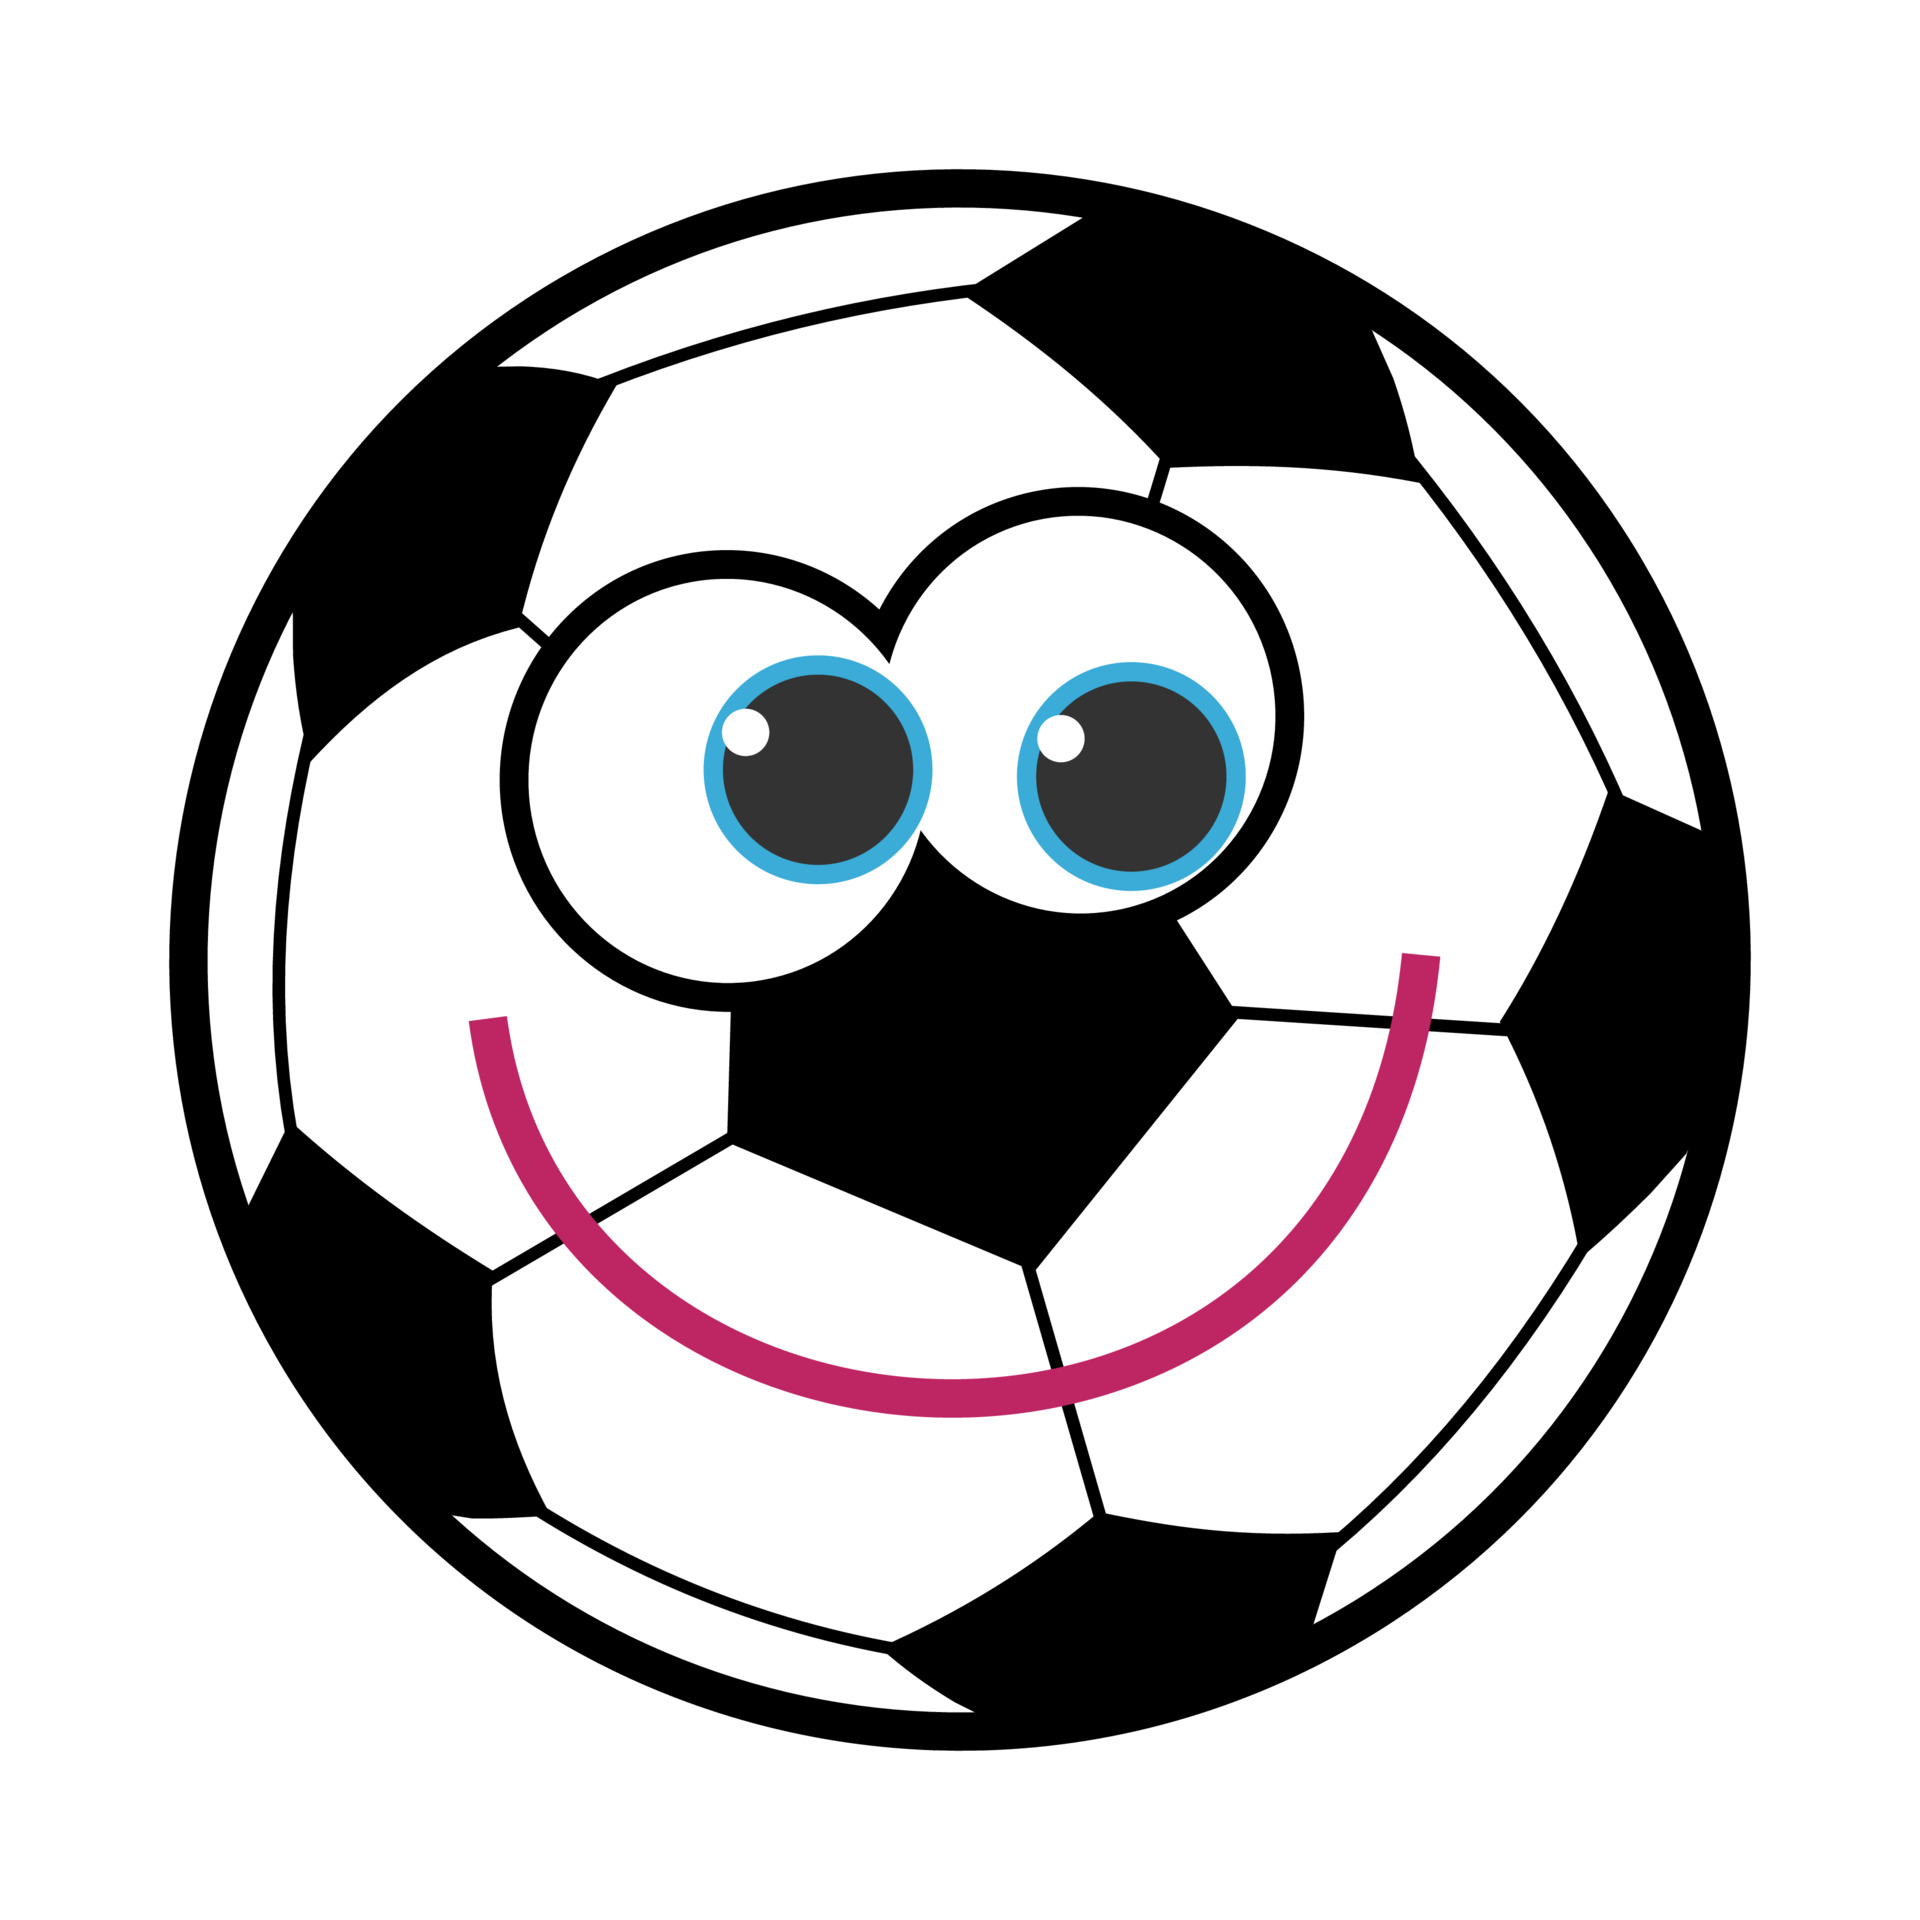 A Funny Cartoon Soccer Ball with a Happy Face 3818043 Vector Art at Vecteezy